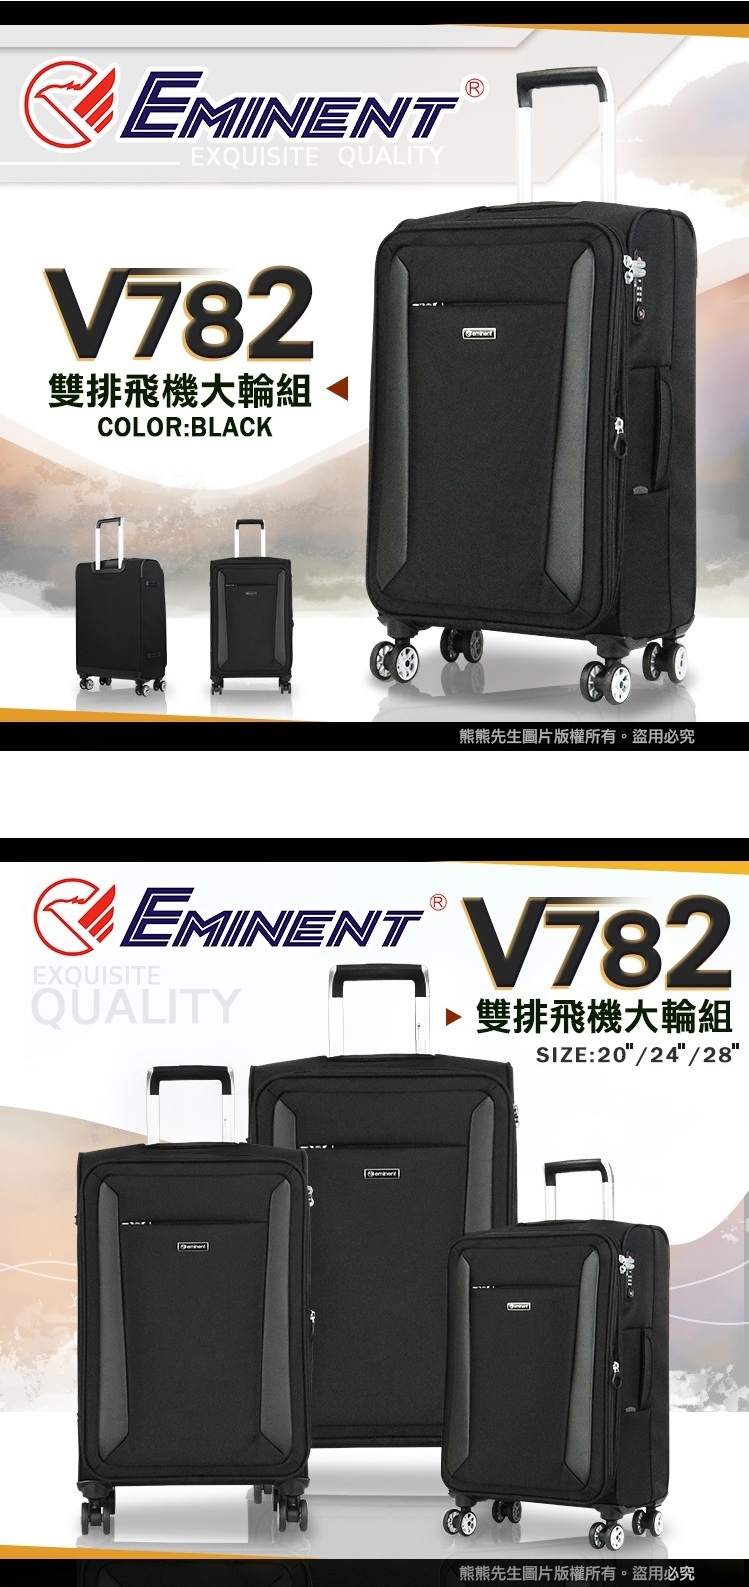 eminent 萬國通路 行李箱 旅行箱 登機箱 布箱 20吋 V782 (黑色)